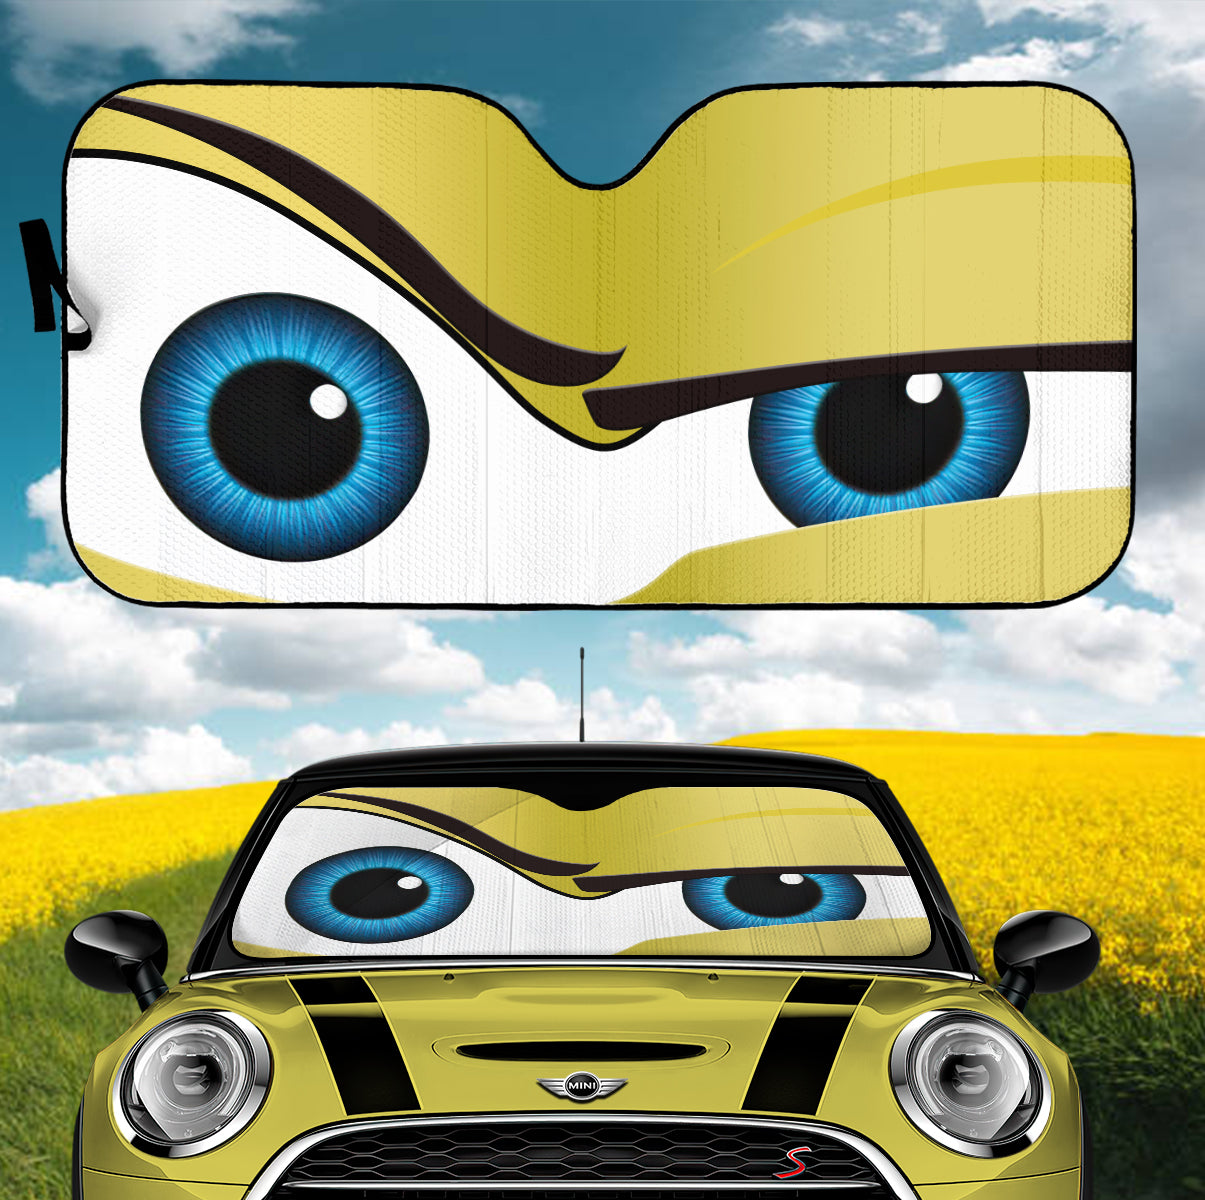 Funny Yellow The Rock Style Cartoon Eye Car Auto Sunshades